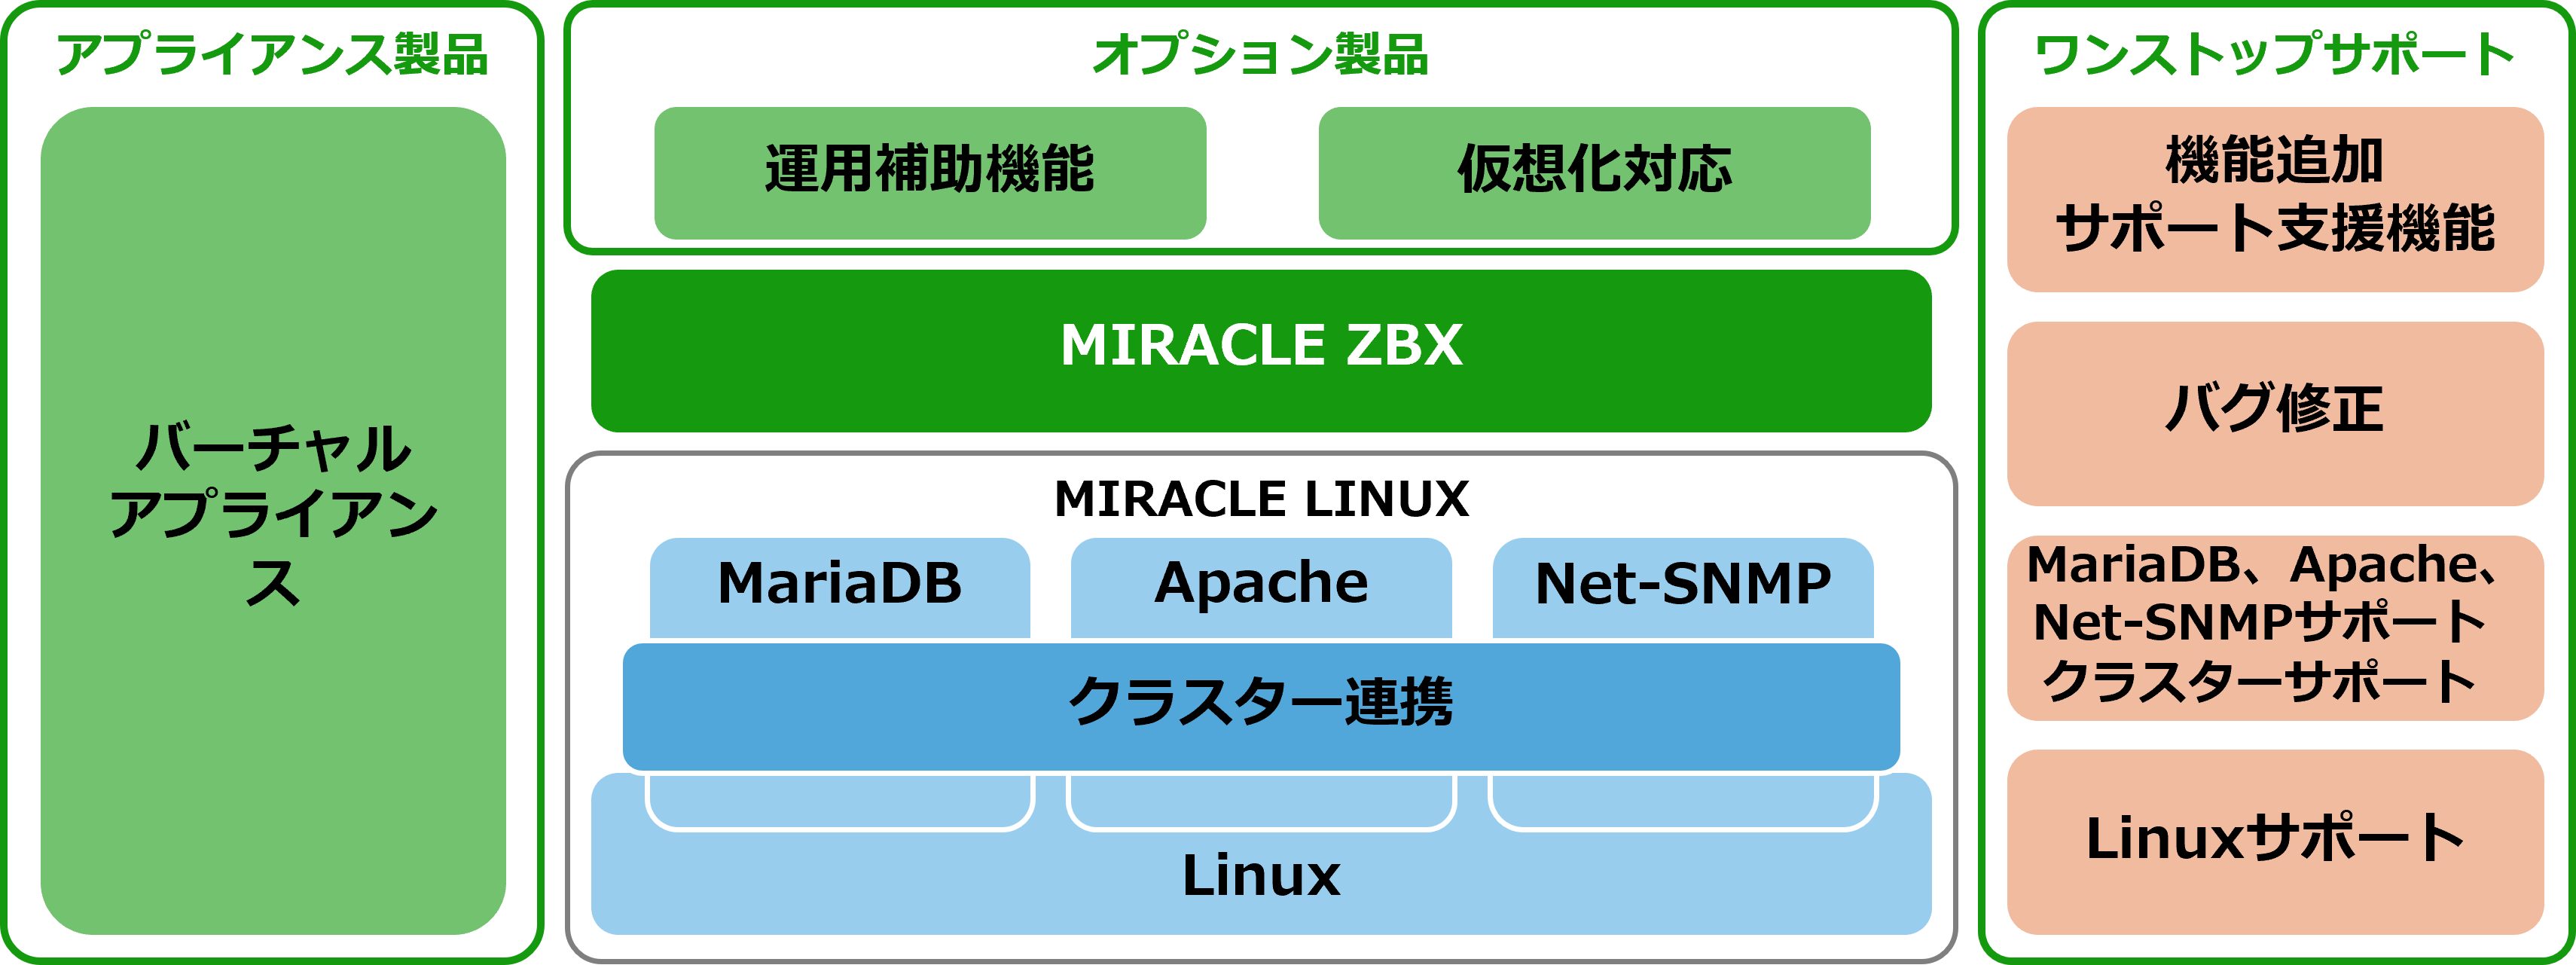 MIRACLE ZBX シリーズの構成図 